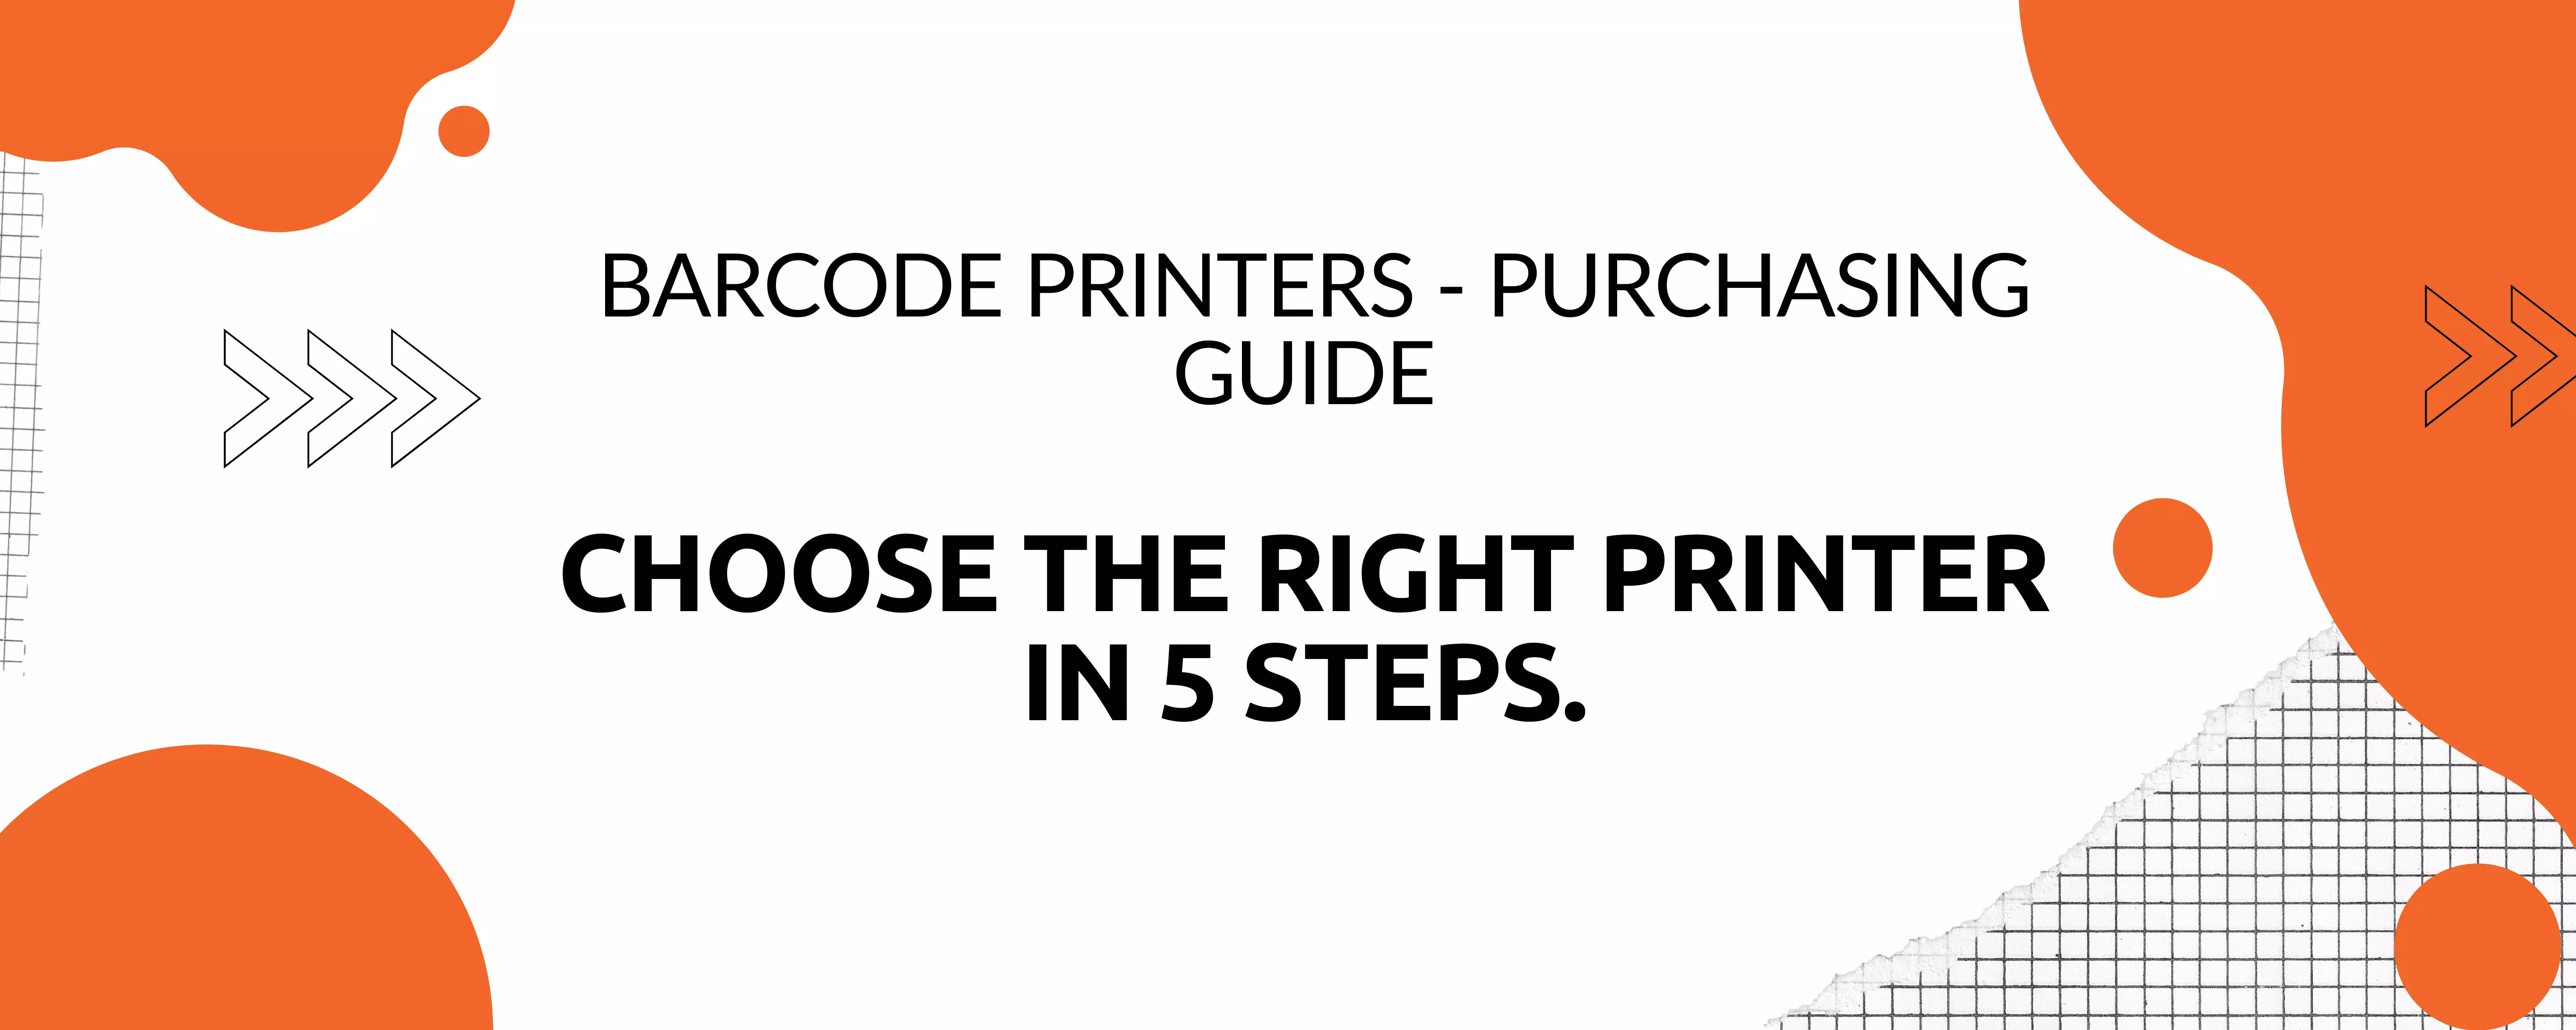 printers_barcode_purchasing_guide_en